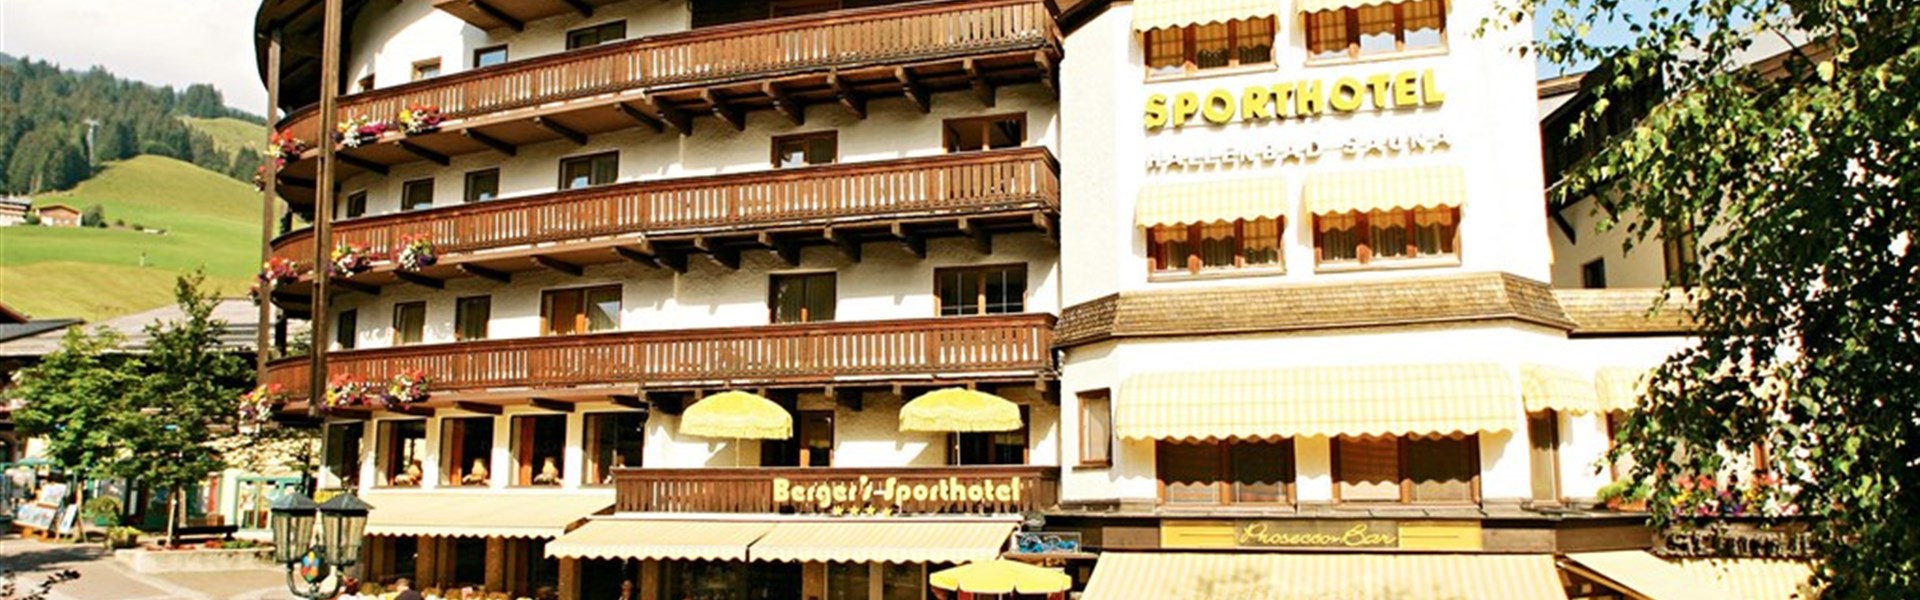 Bergers Sporthotel (S) - 